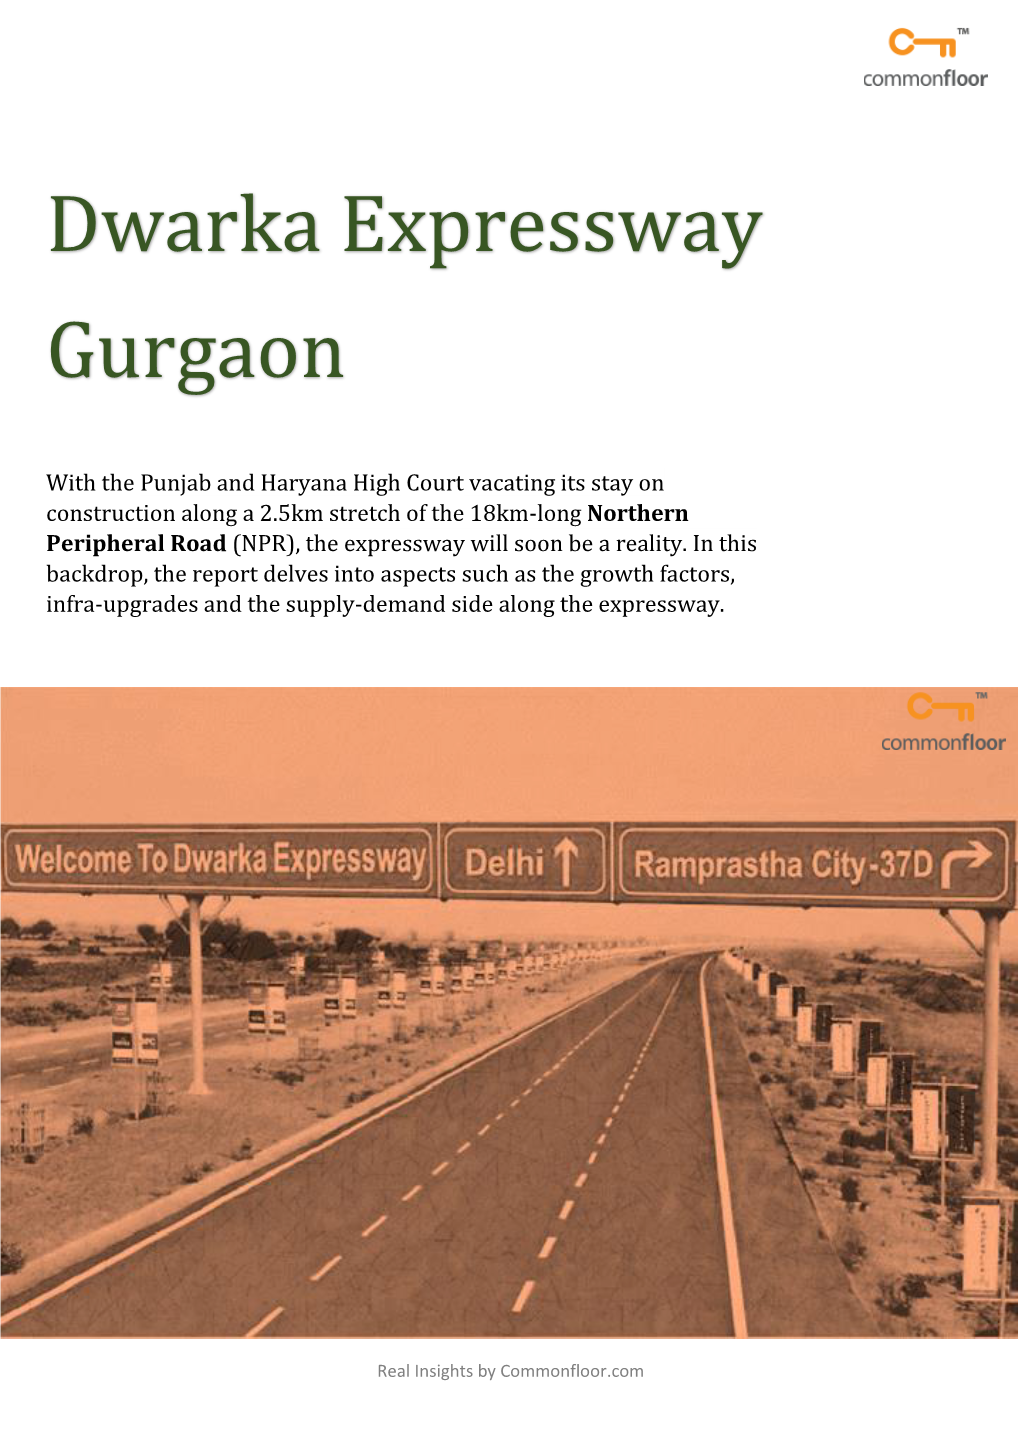 Dwarka Expressway Gurgaon